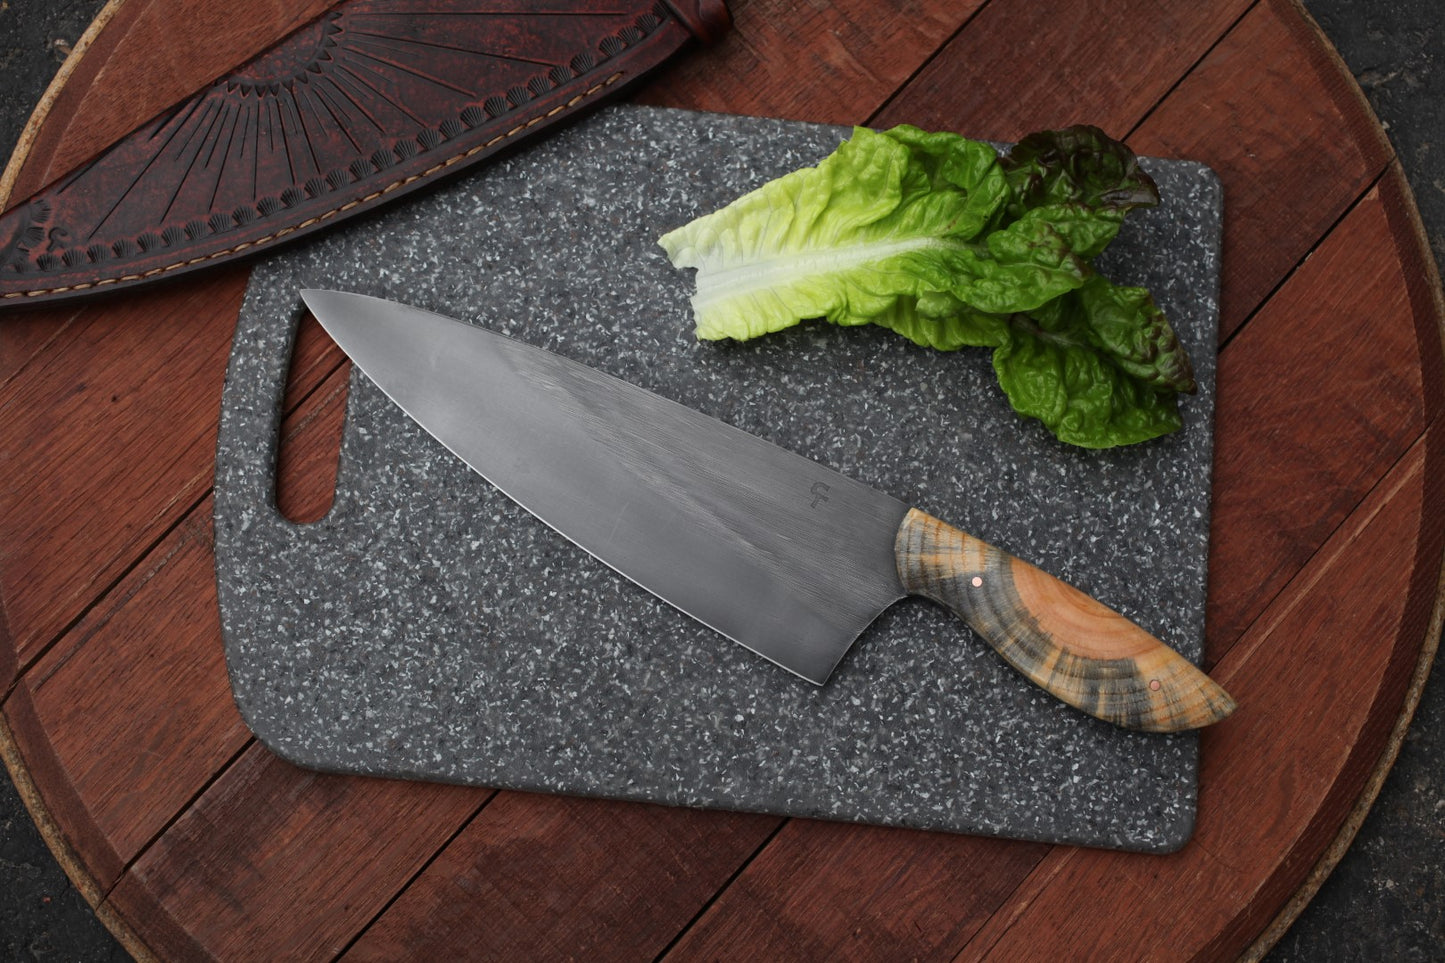 9 inch Custom Chefs knife in leather- Ponderosa pine